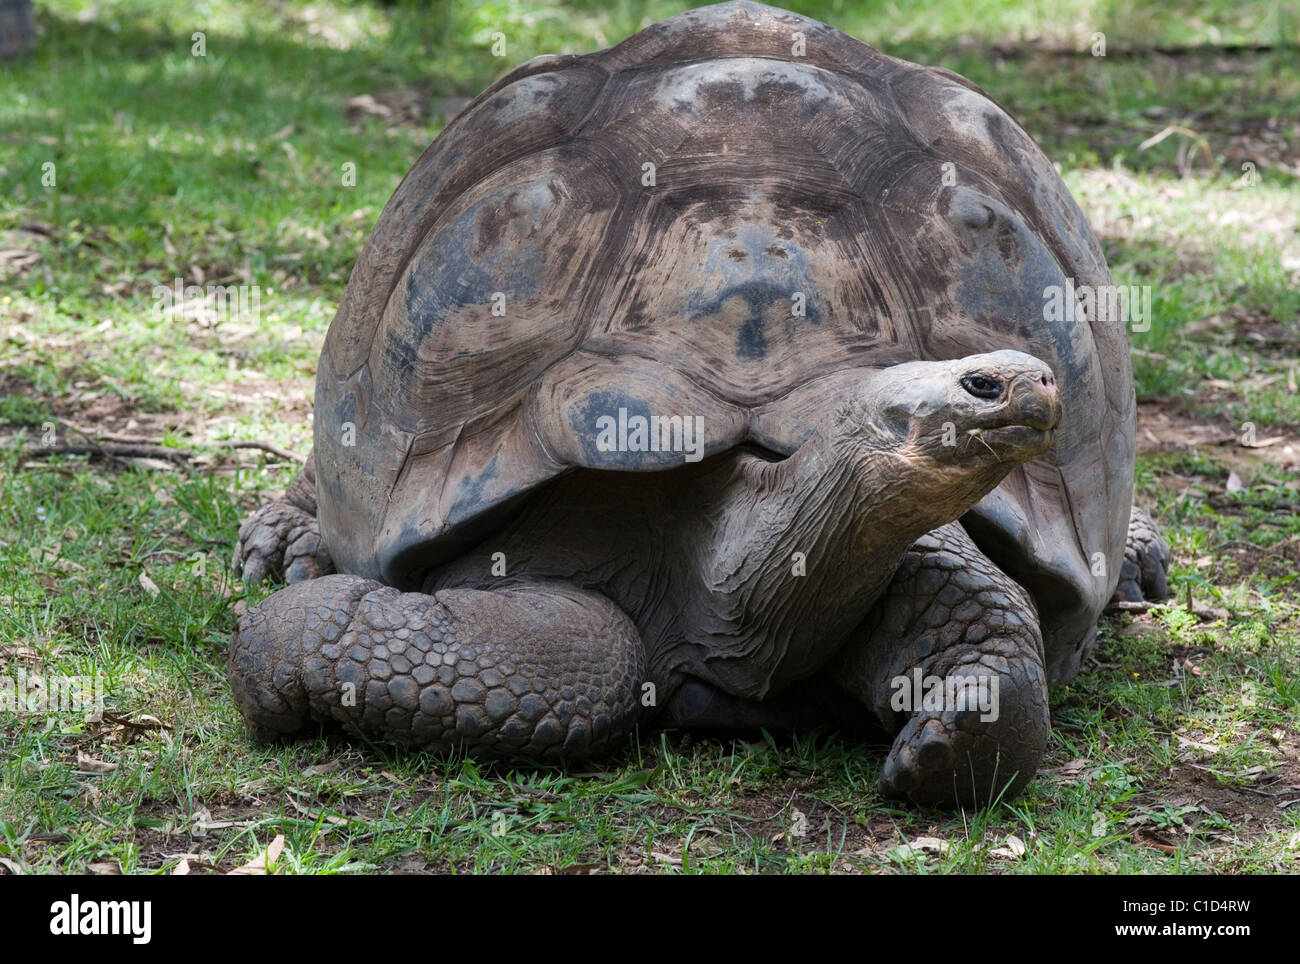 Die größte lebende Schildkrötenart, die Giant Galapagos Schildkröte Chelonoidis nigra Stockfoto